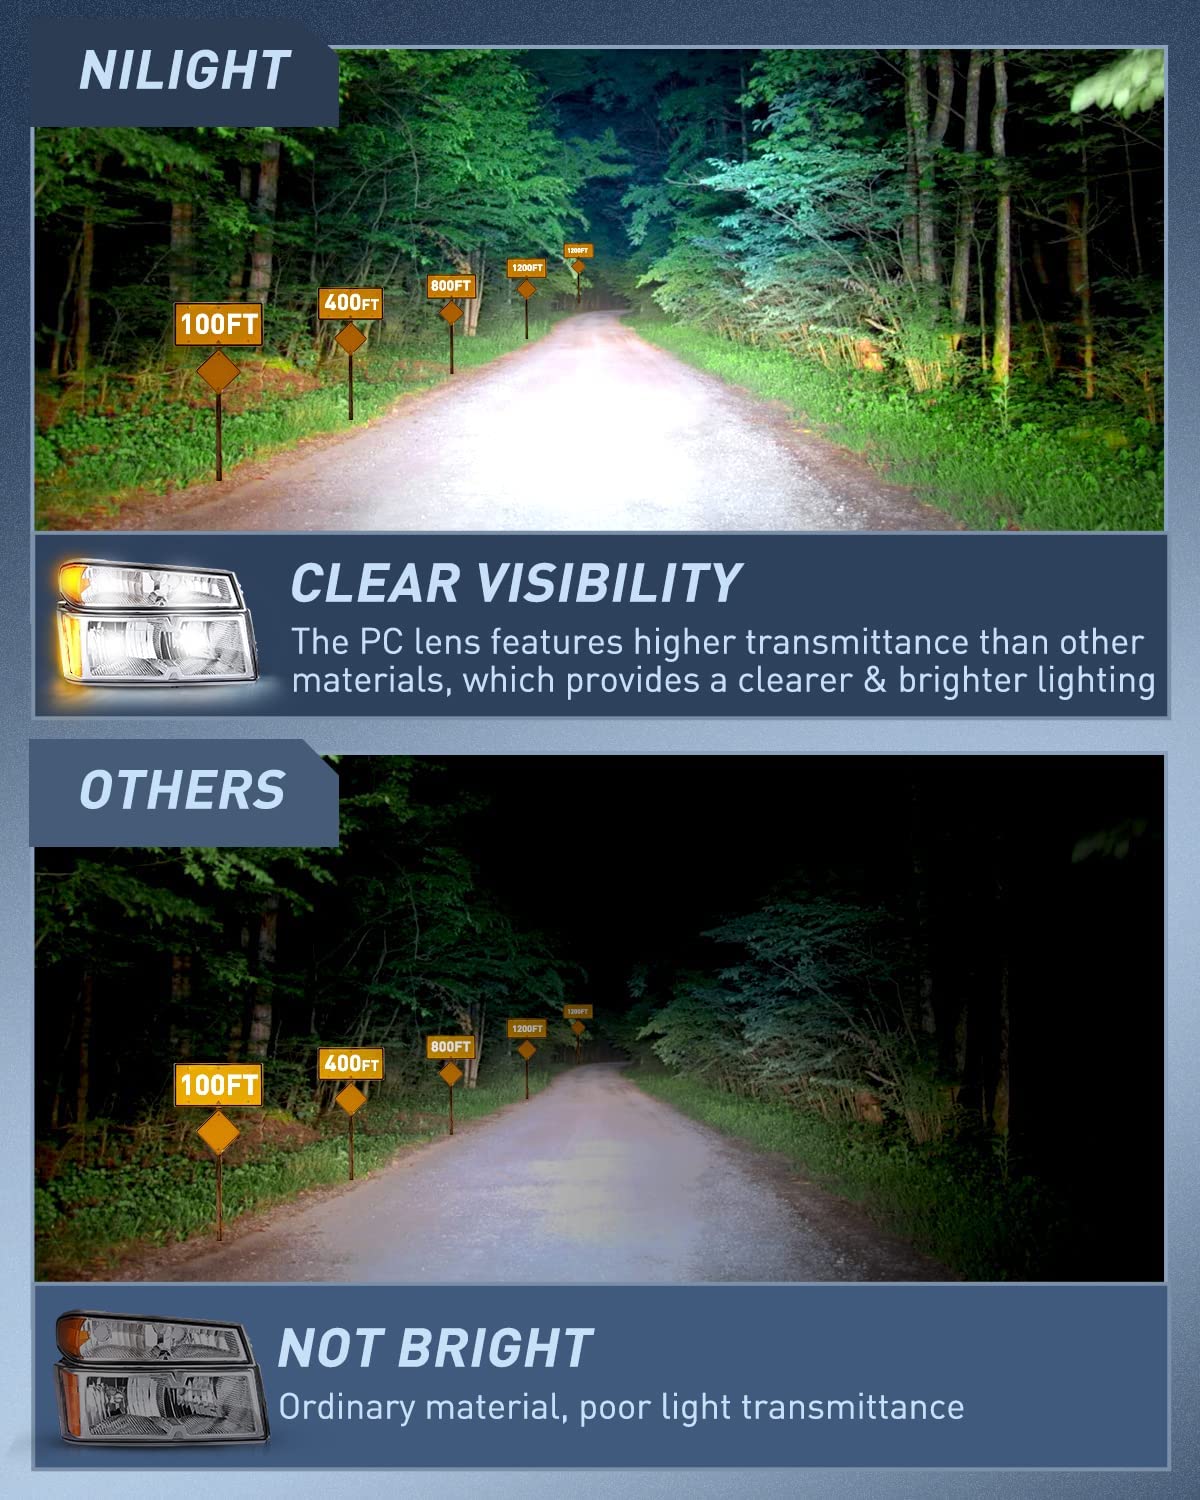 2004-2012 Chevy Colorado 2004-2012 GMC Canyon 2006-2008 Isuzu Headlight Assembly Chrome Case Clear Reflector Nilight